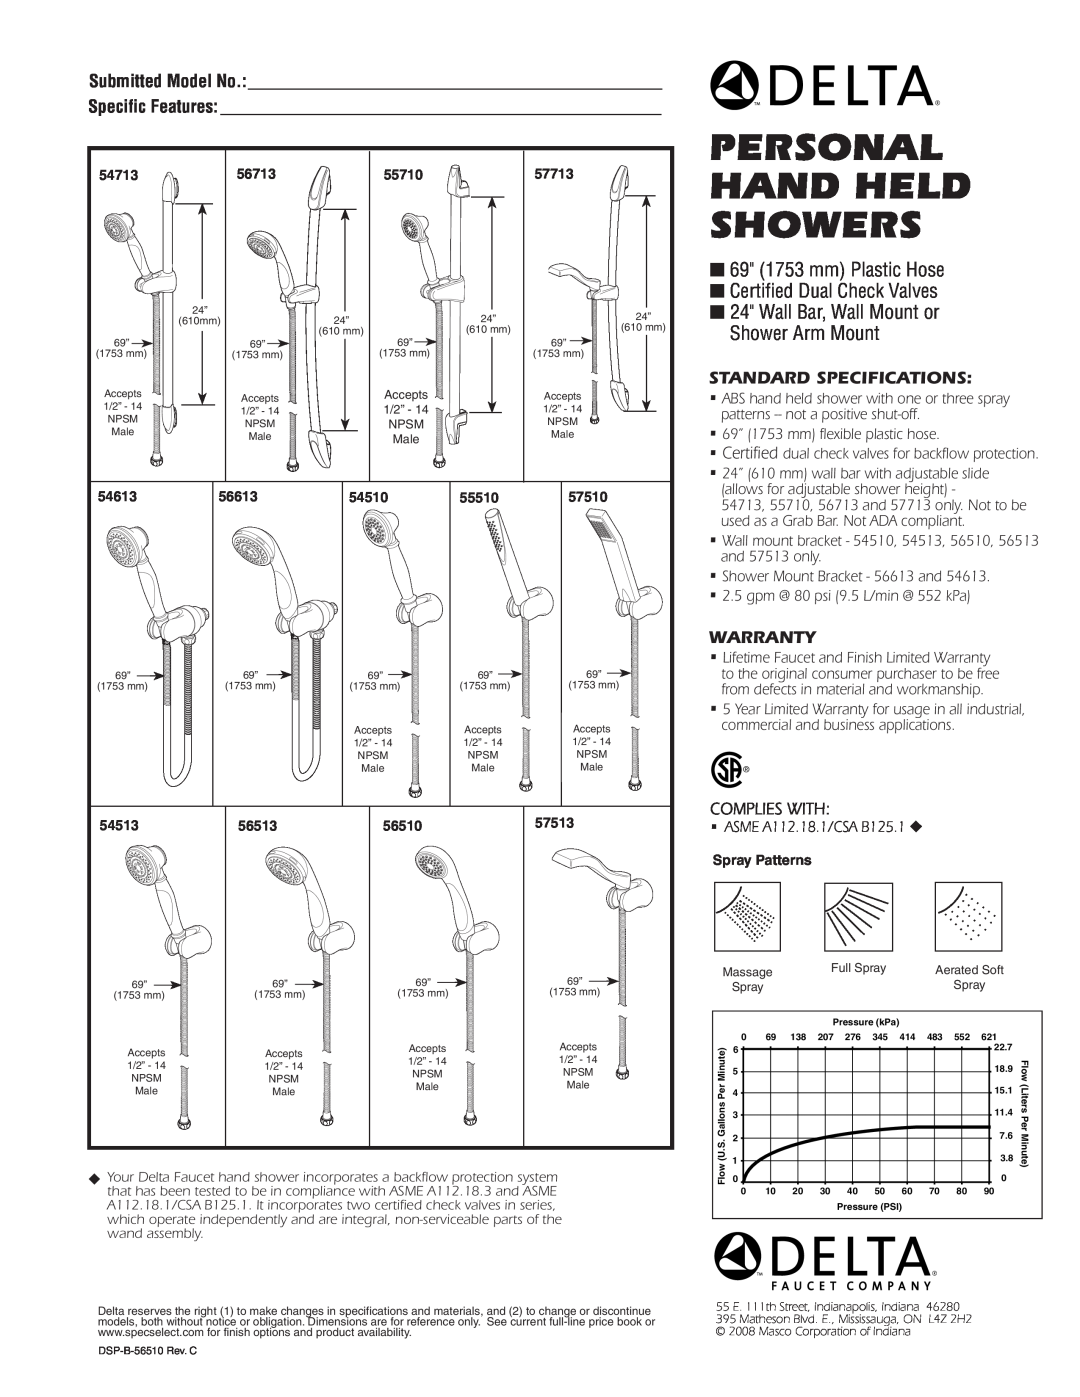 Delta 57510 warranty Personal Hand Held Showers, n 69 1753 mm Plastic Hose n Certified Dual Check Valves, Warranty, 54713 